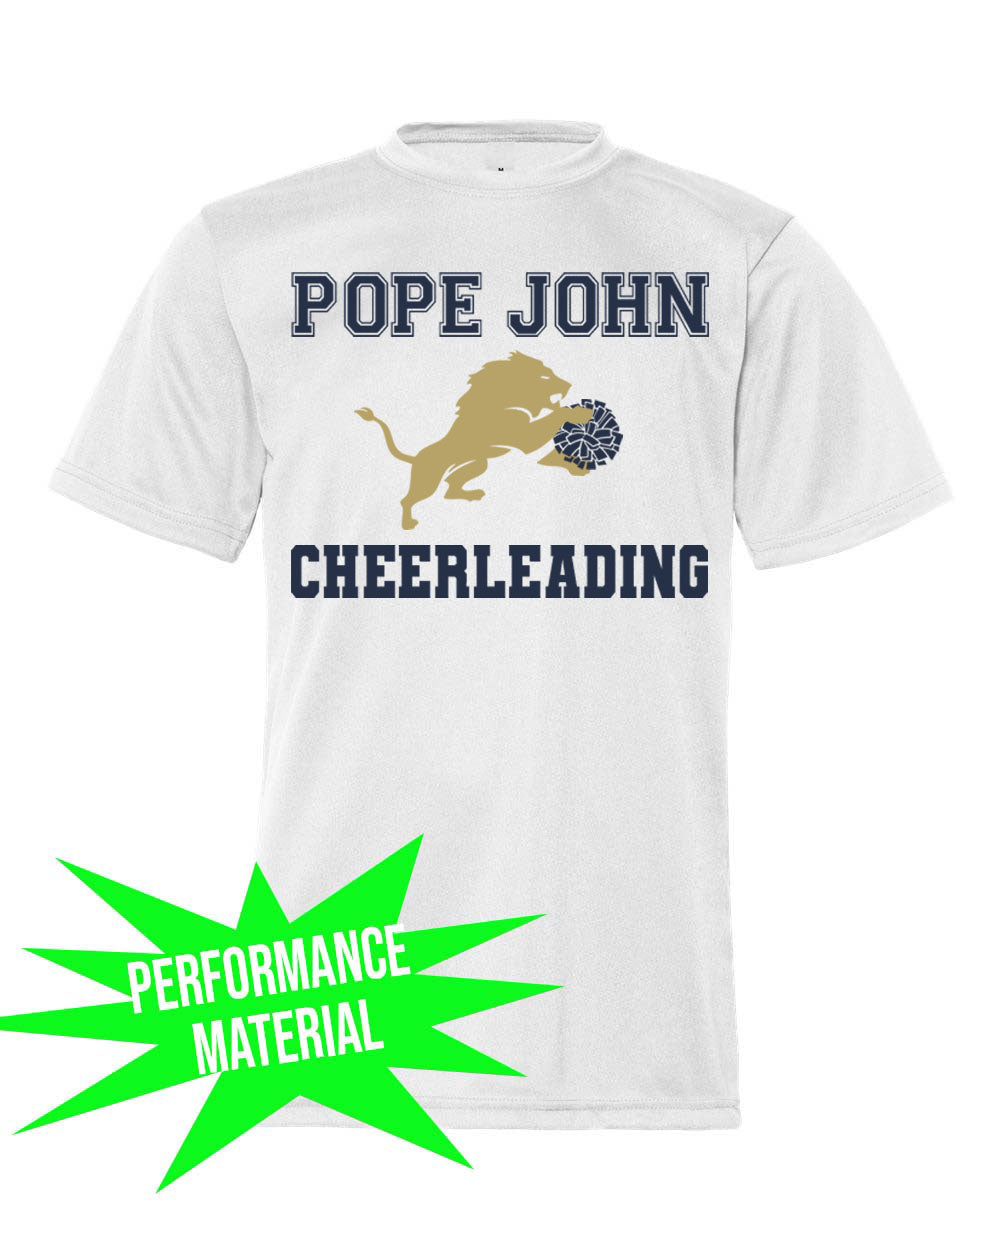 Pope John Cheer Performance Material design 1 T-Shirt